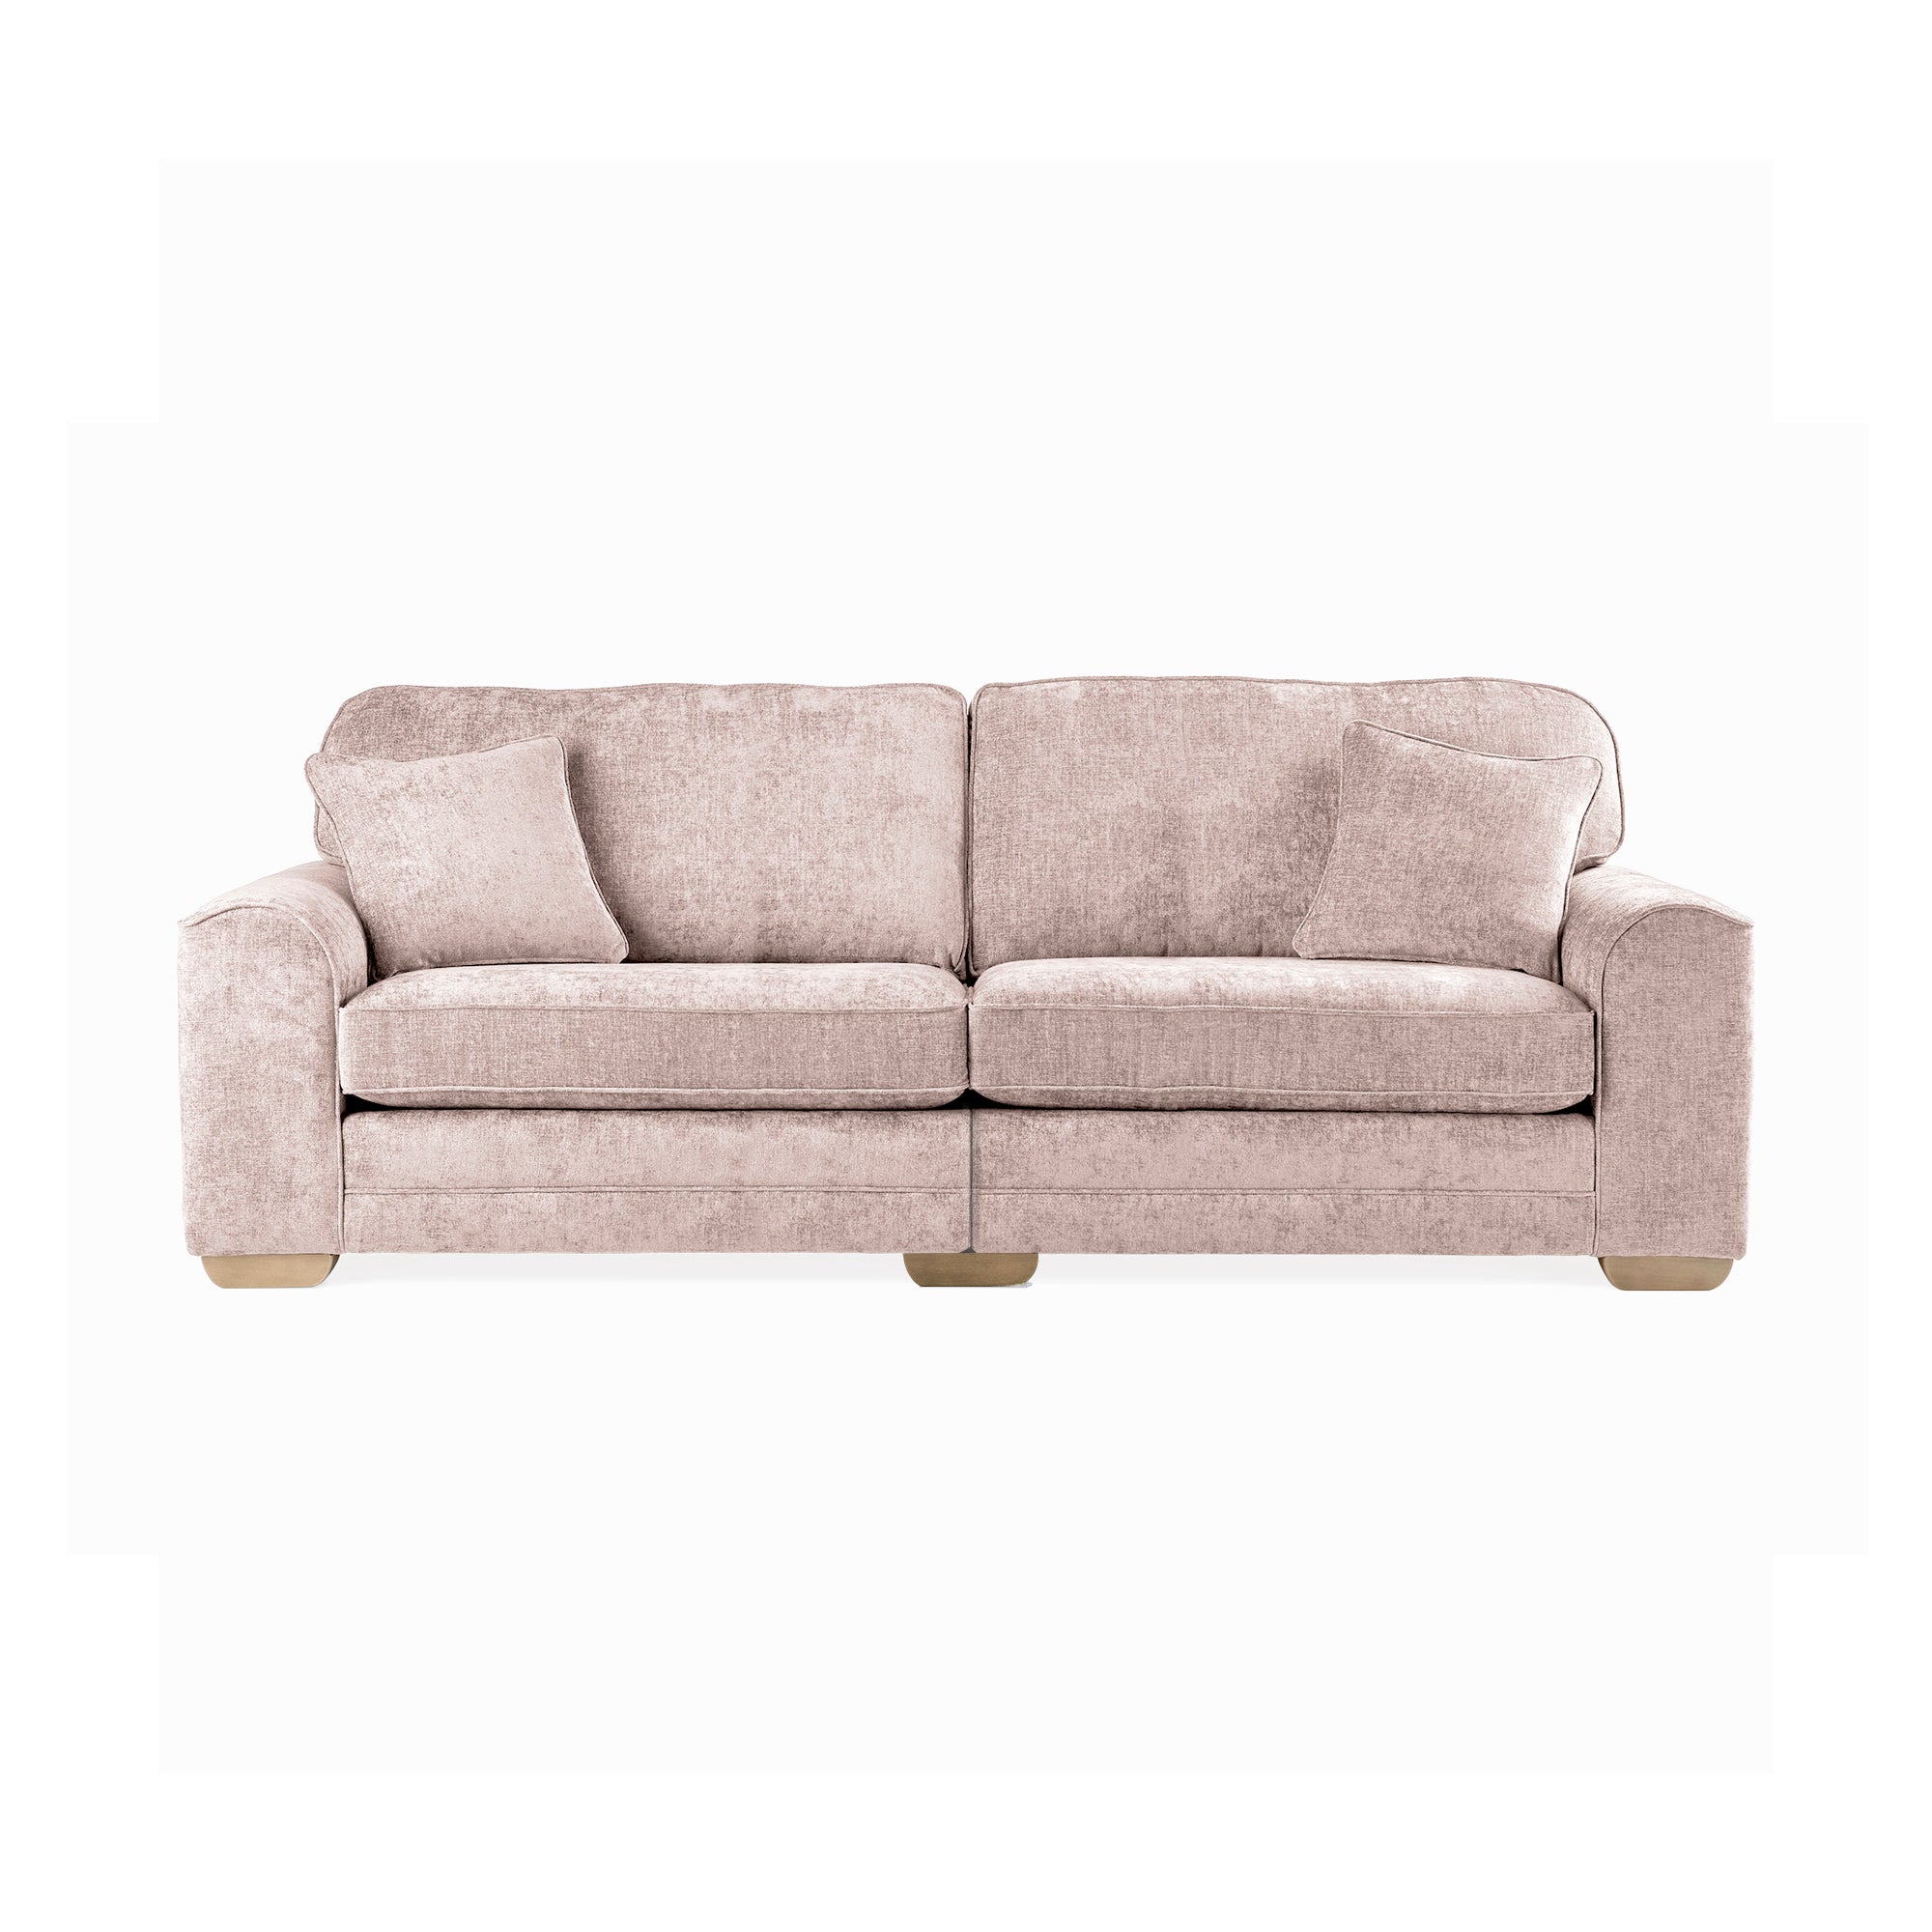 Morello 4 Seater Sofa Pink